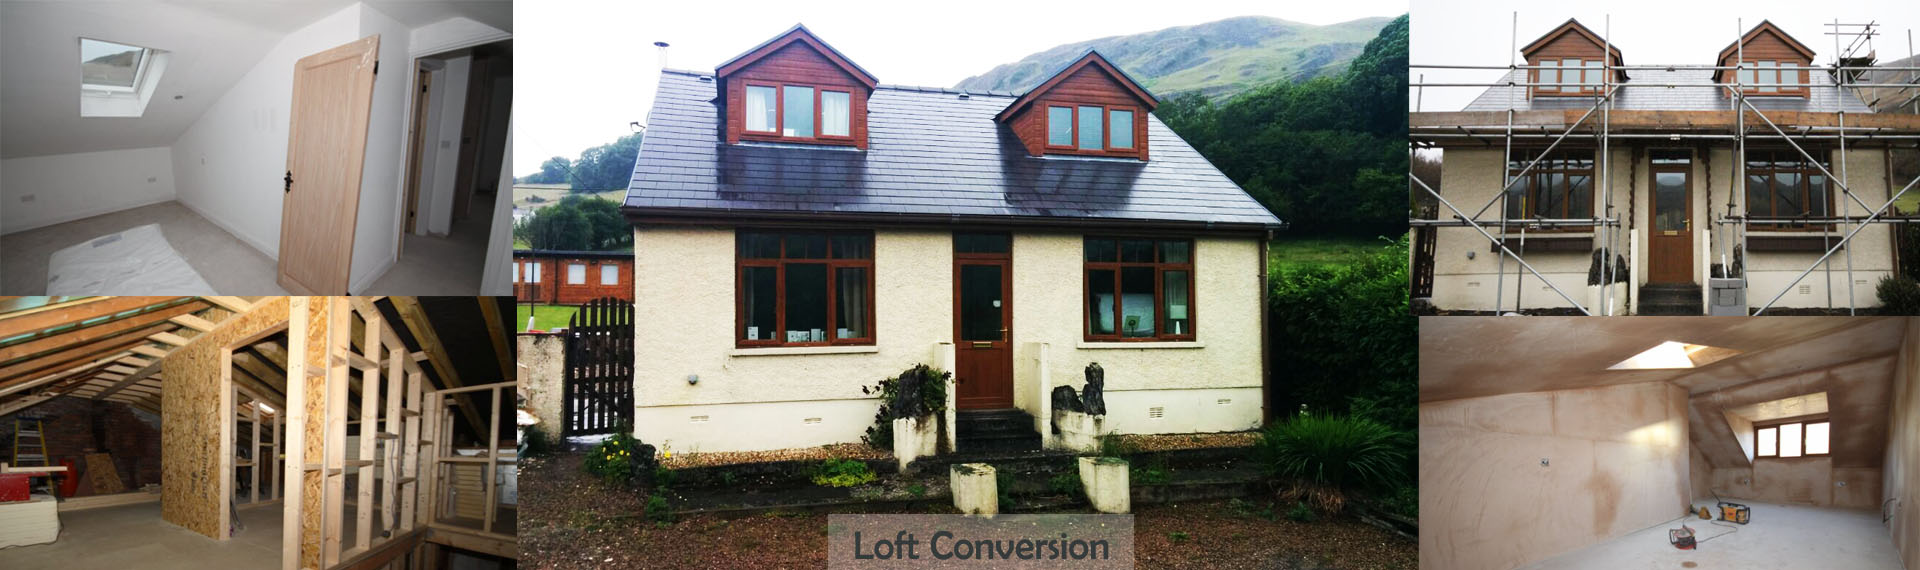 Loft Conversion by S&A Building Contractors in Neath, Port Talbot, Swansea, Porthcawl, Bridgend.